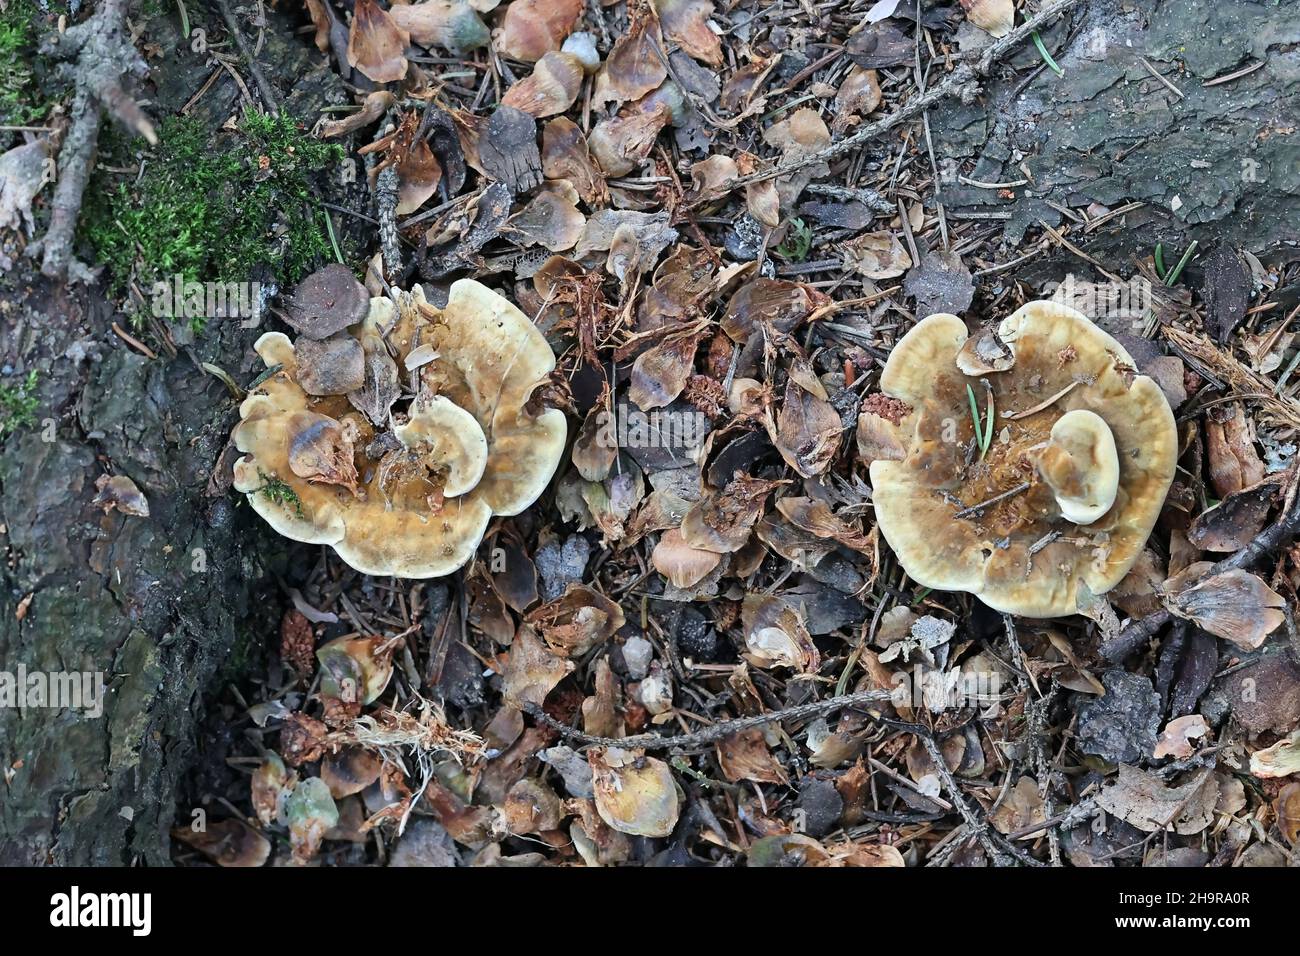 Pelloporus tomentosus, known as Velvet Rosette, wild polypore fungus from Finland Stock Photo